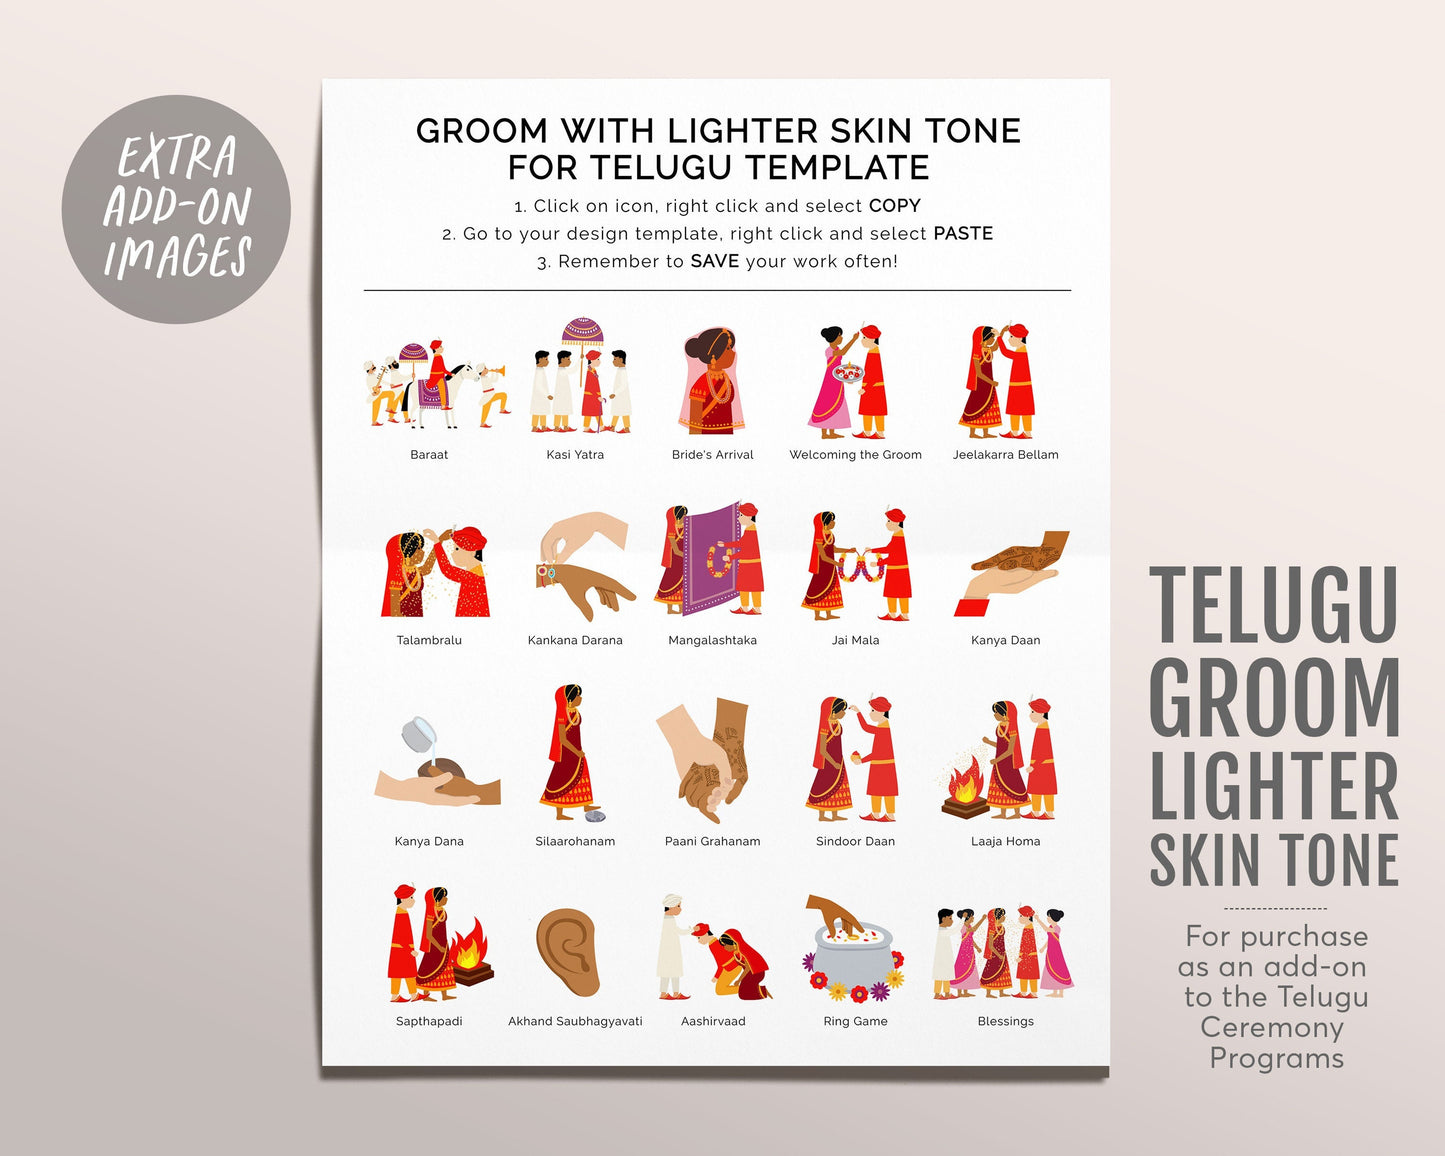 Telugu Groom With Lighter Skin Tone, Add-On Listing For The Telugu Ceremony Program